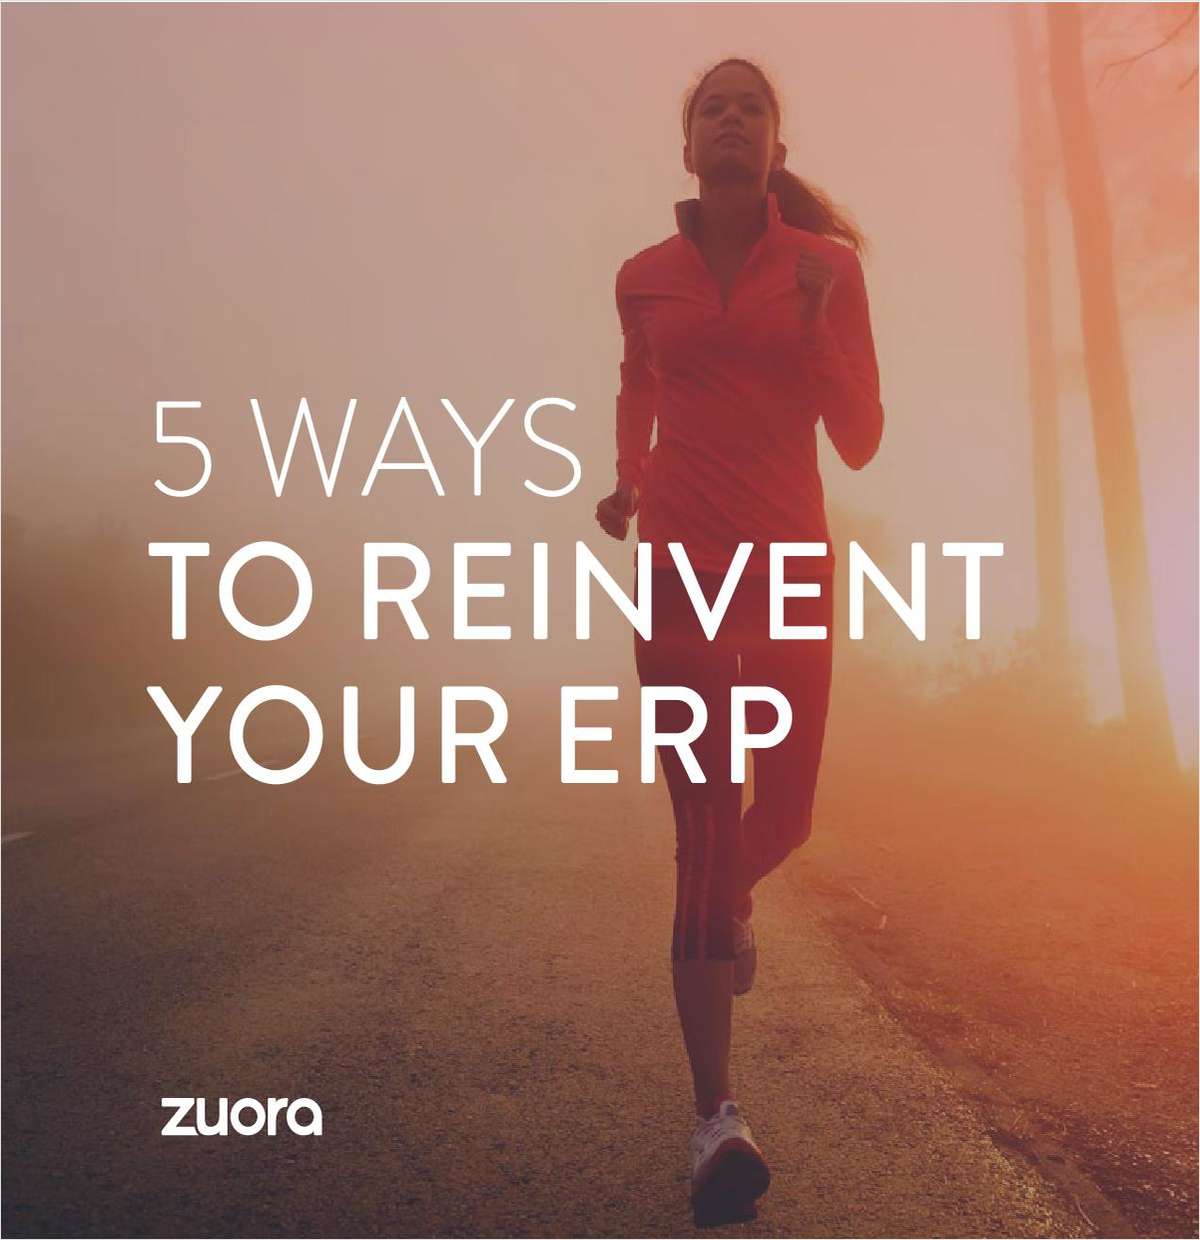 5 Ways to Reinvent your ERP